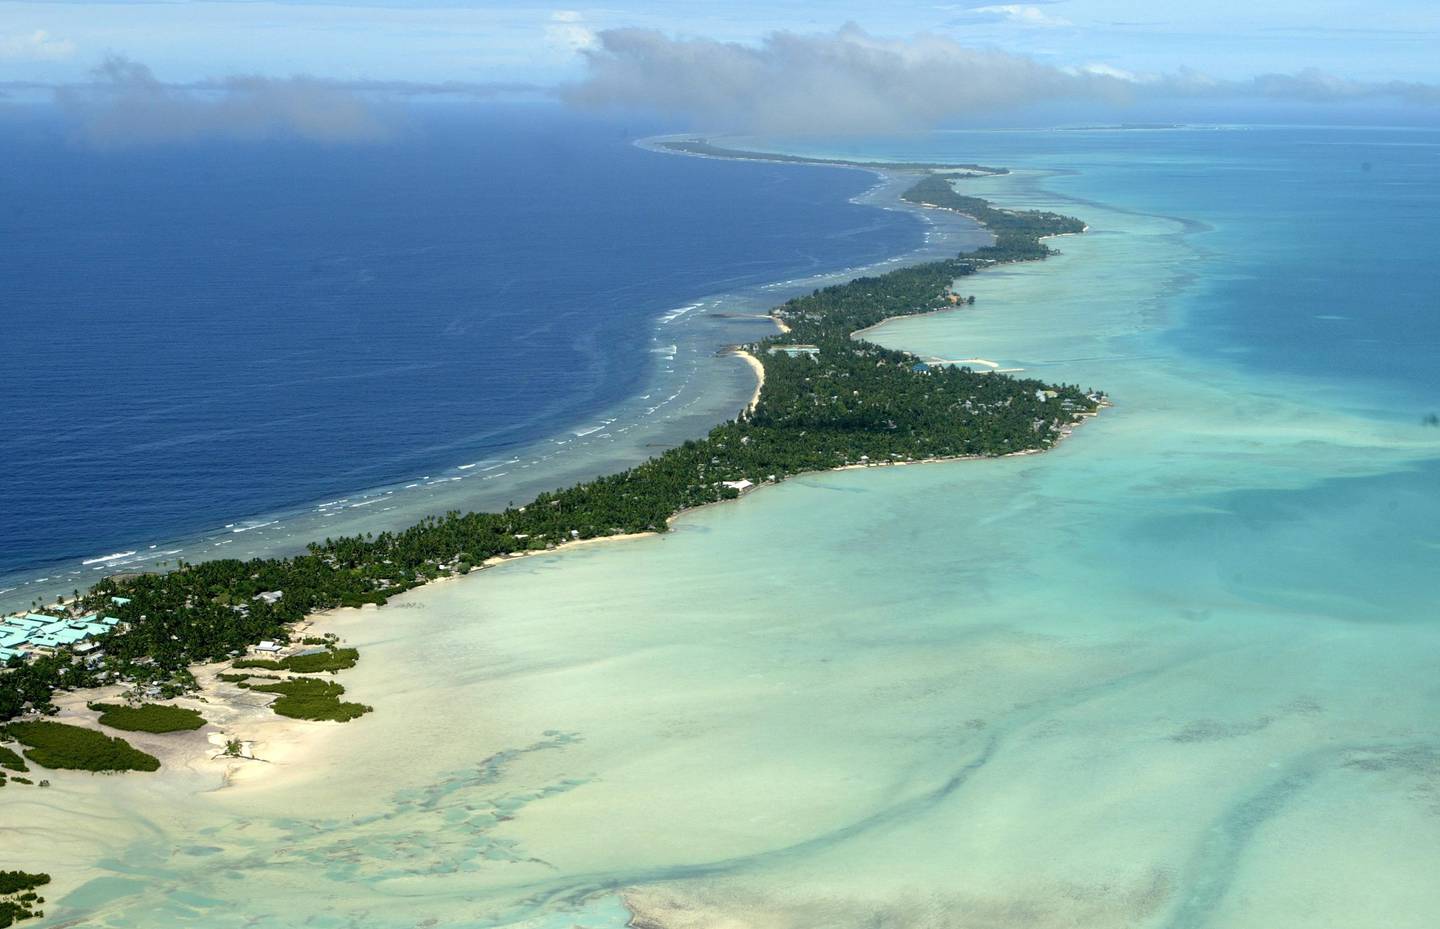  Tarawa atoll, Kiribati, is seen in this aerial view, March 30, 2004. (AP Photo/Richard Vogel)